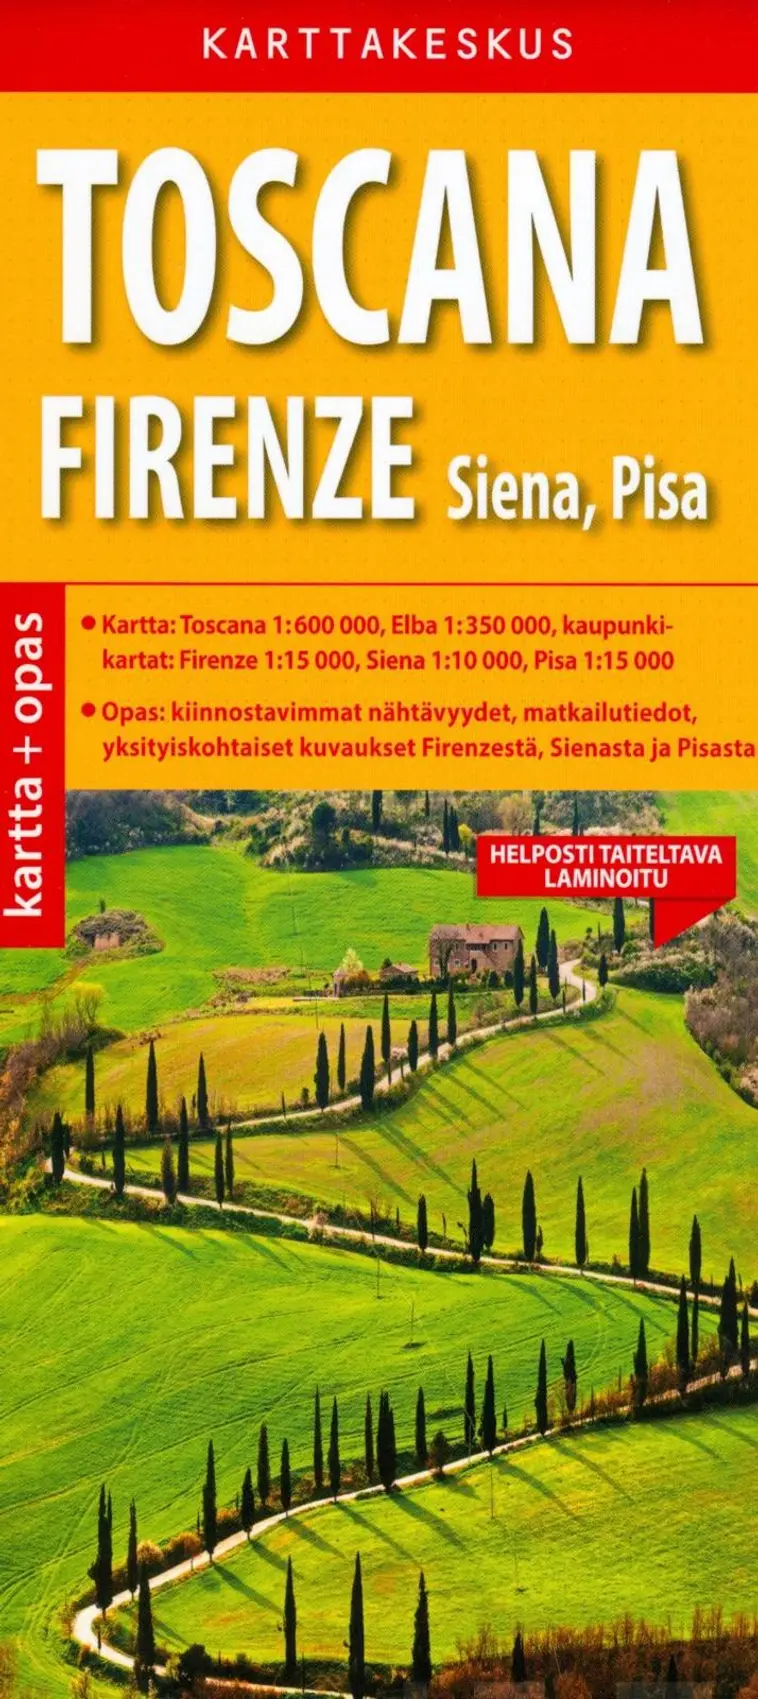 Toscana ja Firenze kartta + opas, 1:600 000/1:350 000/1:15 000/1: 15 000